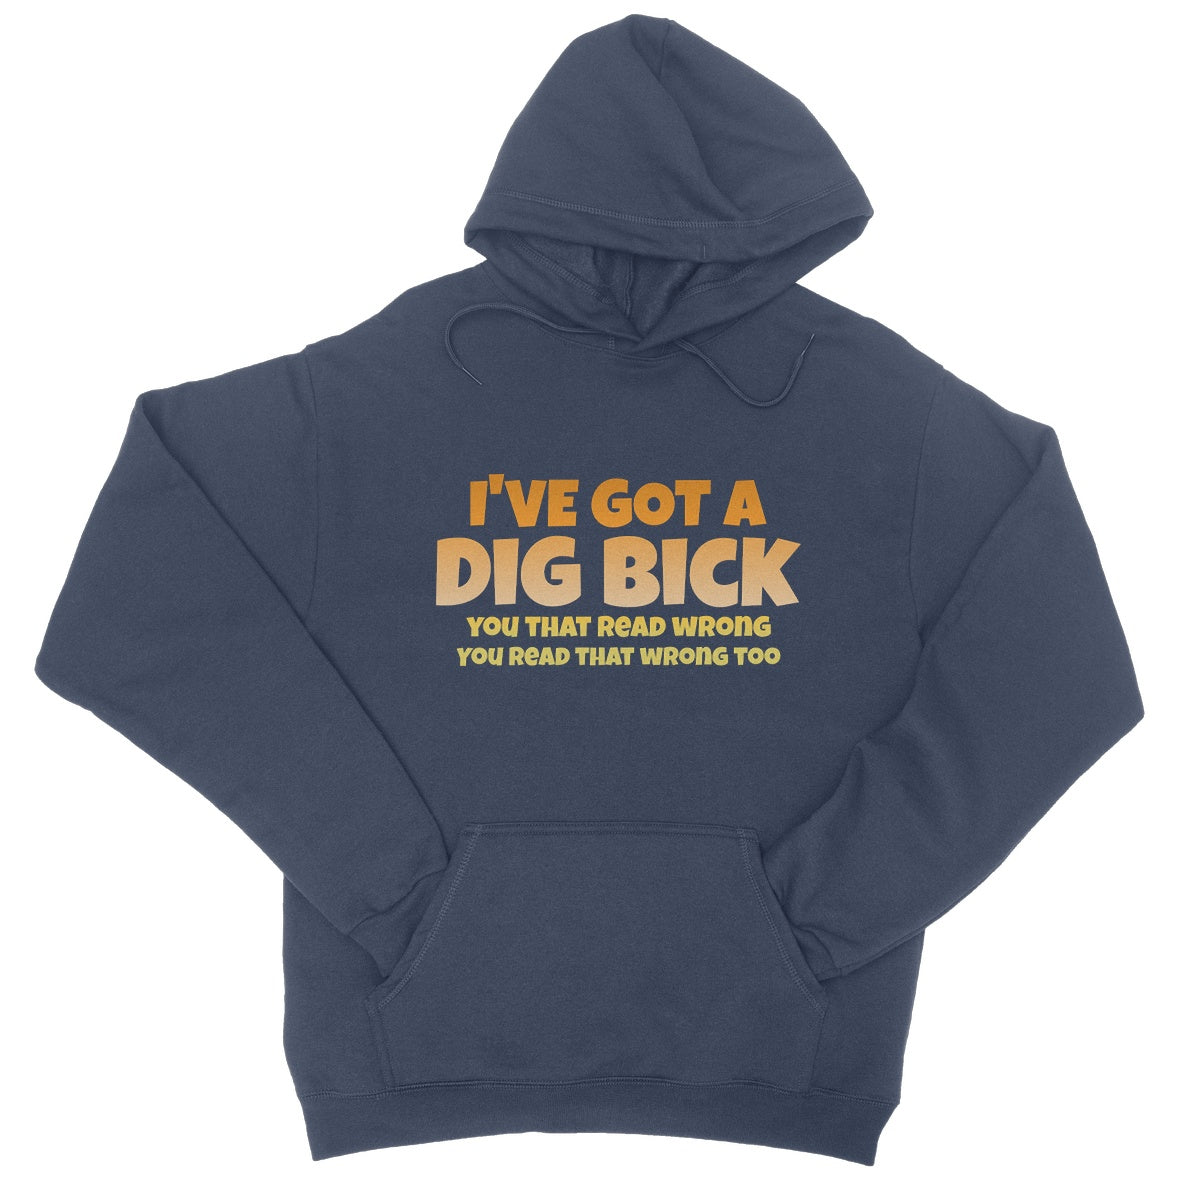 I got a dig bick hoodie navy